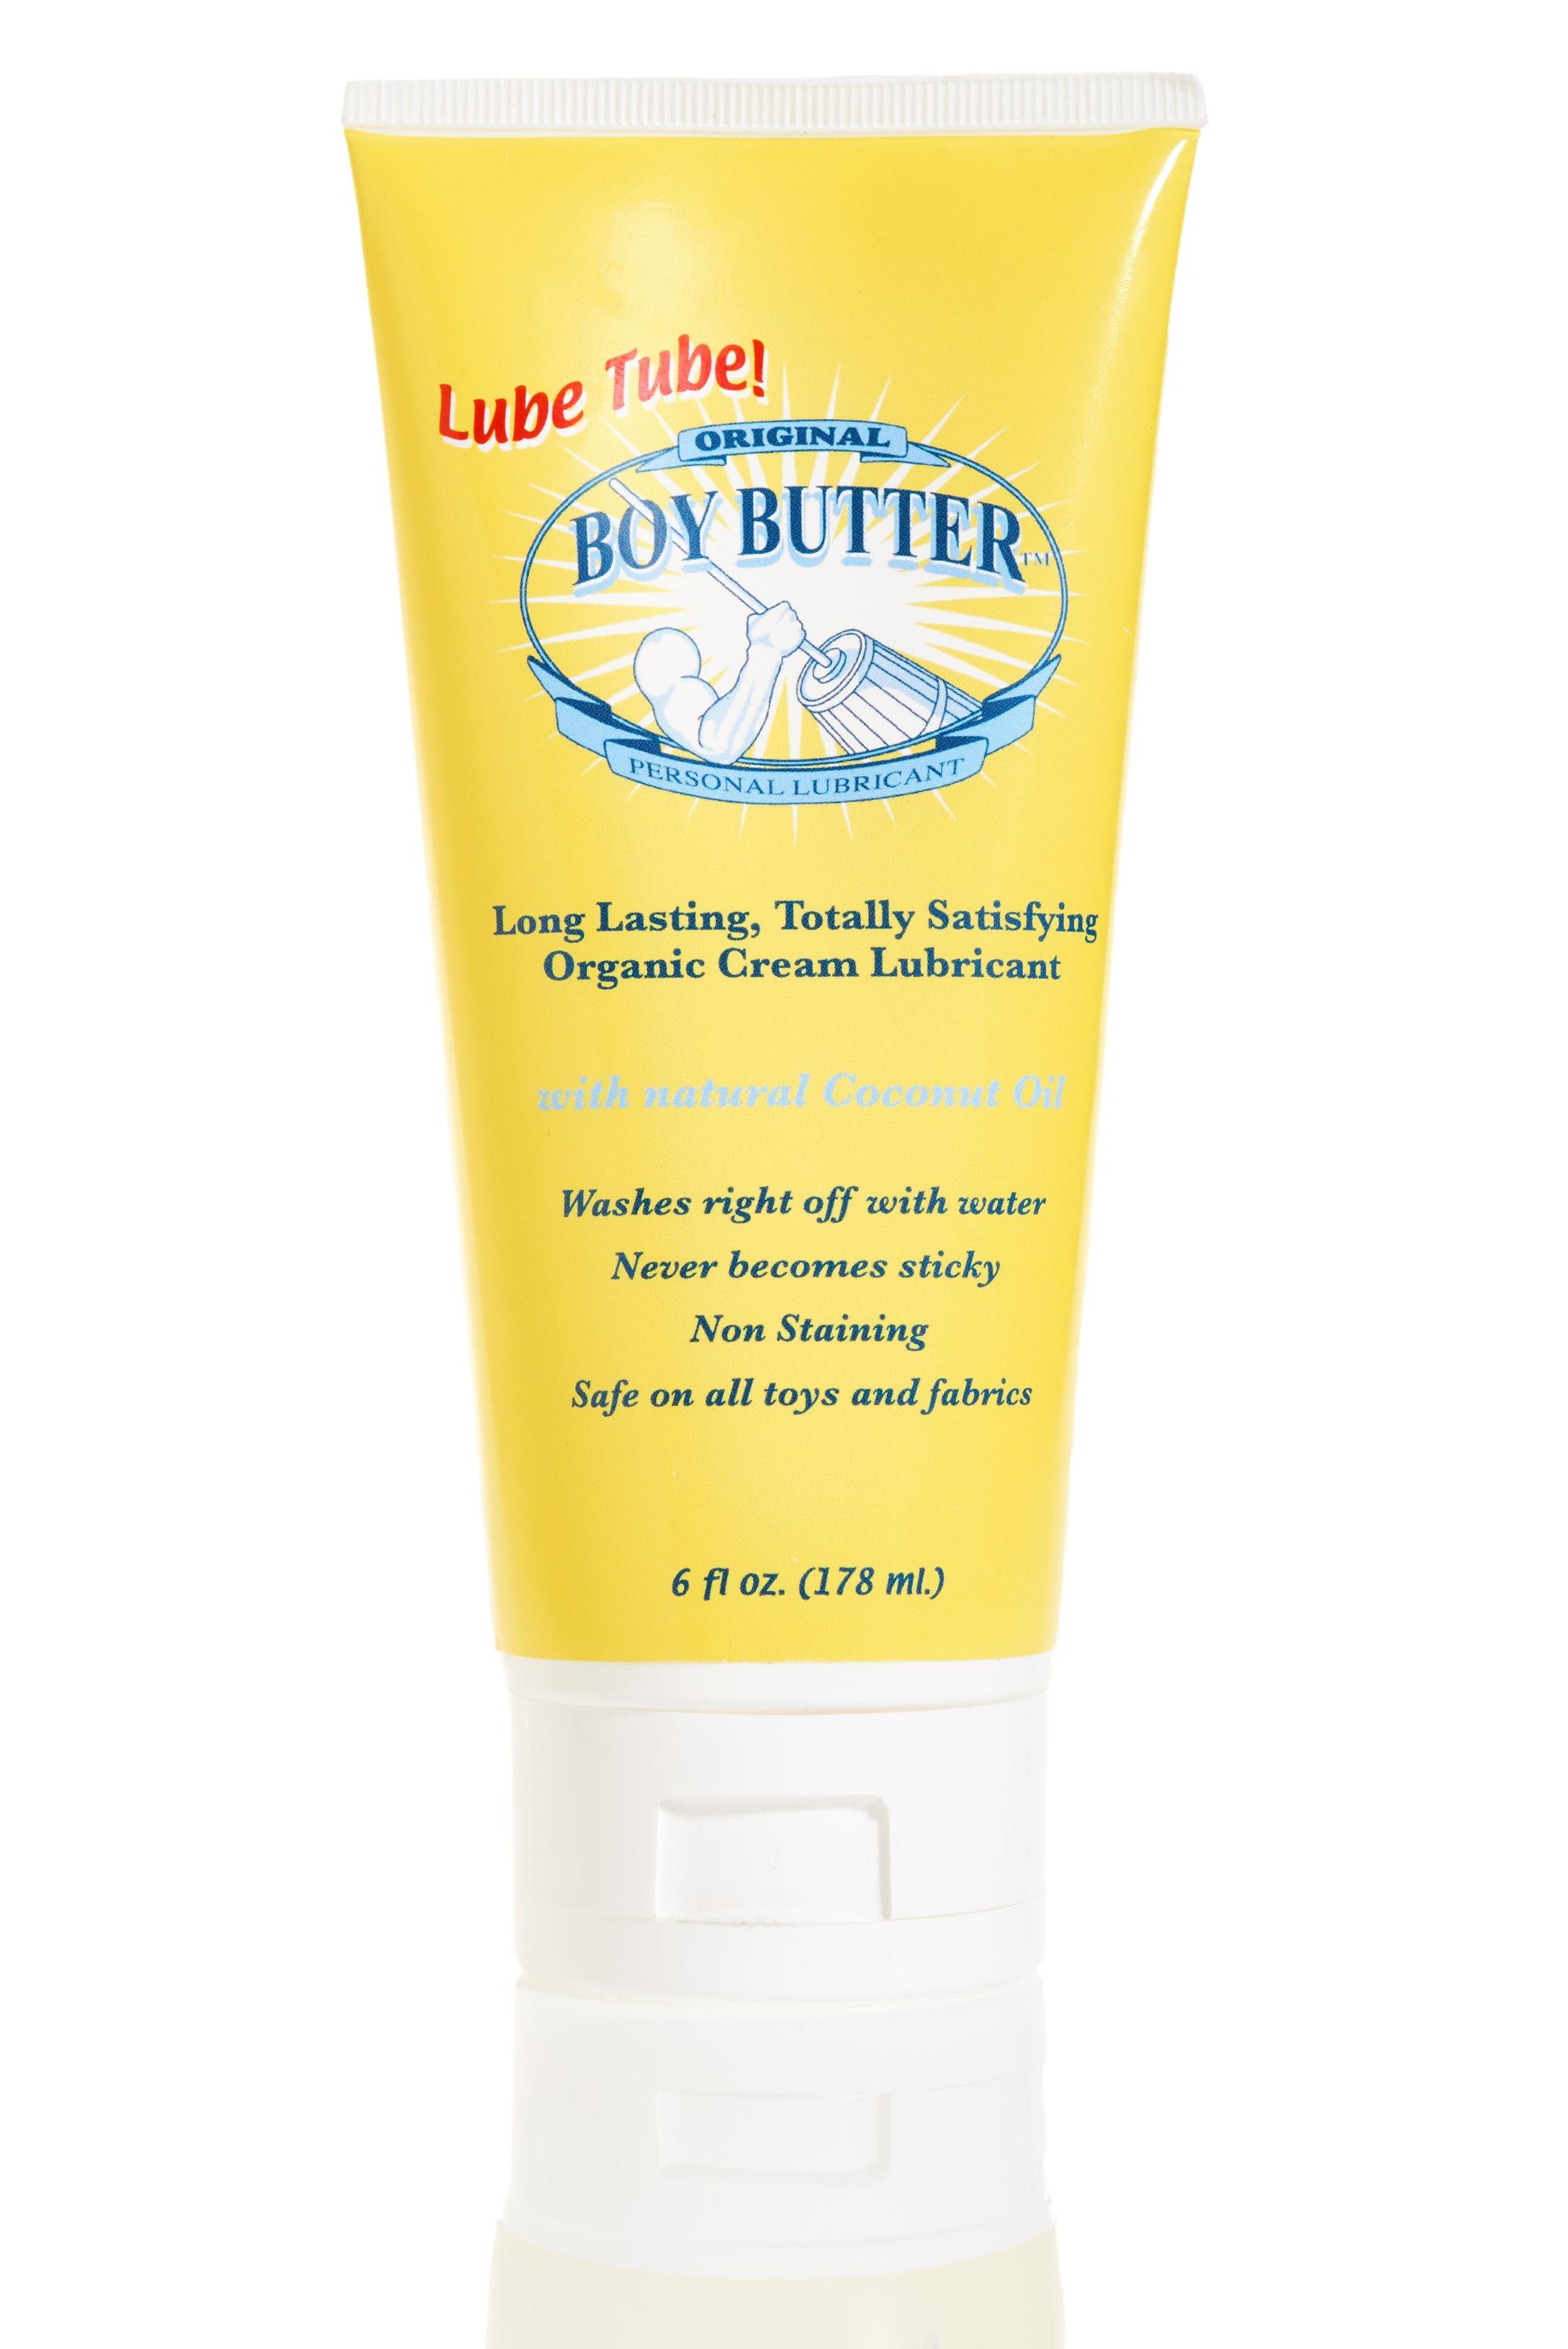 Boy Butter Original Formula 6 Oz Lube Tube